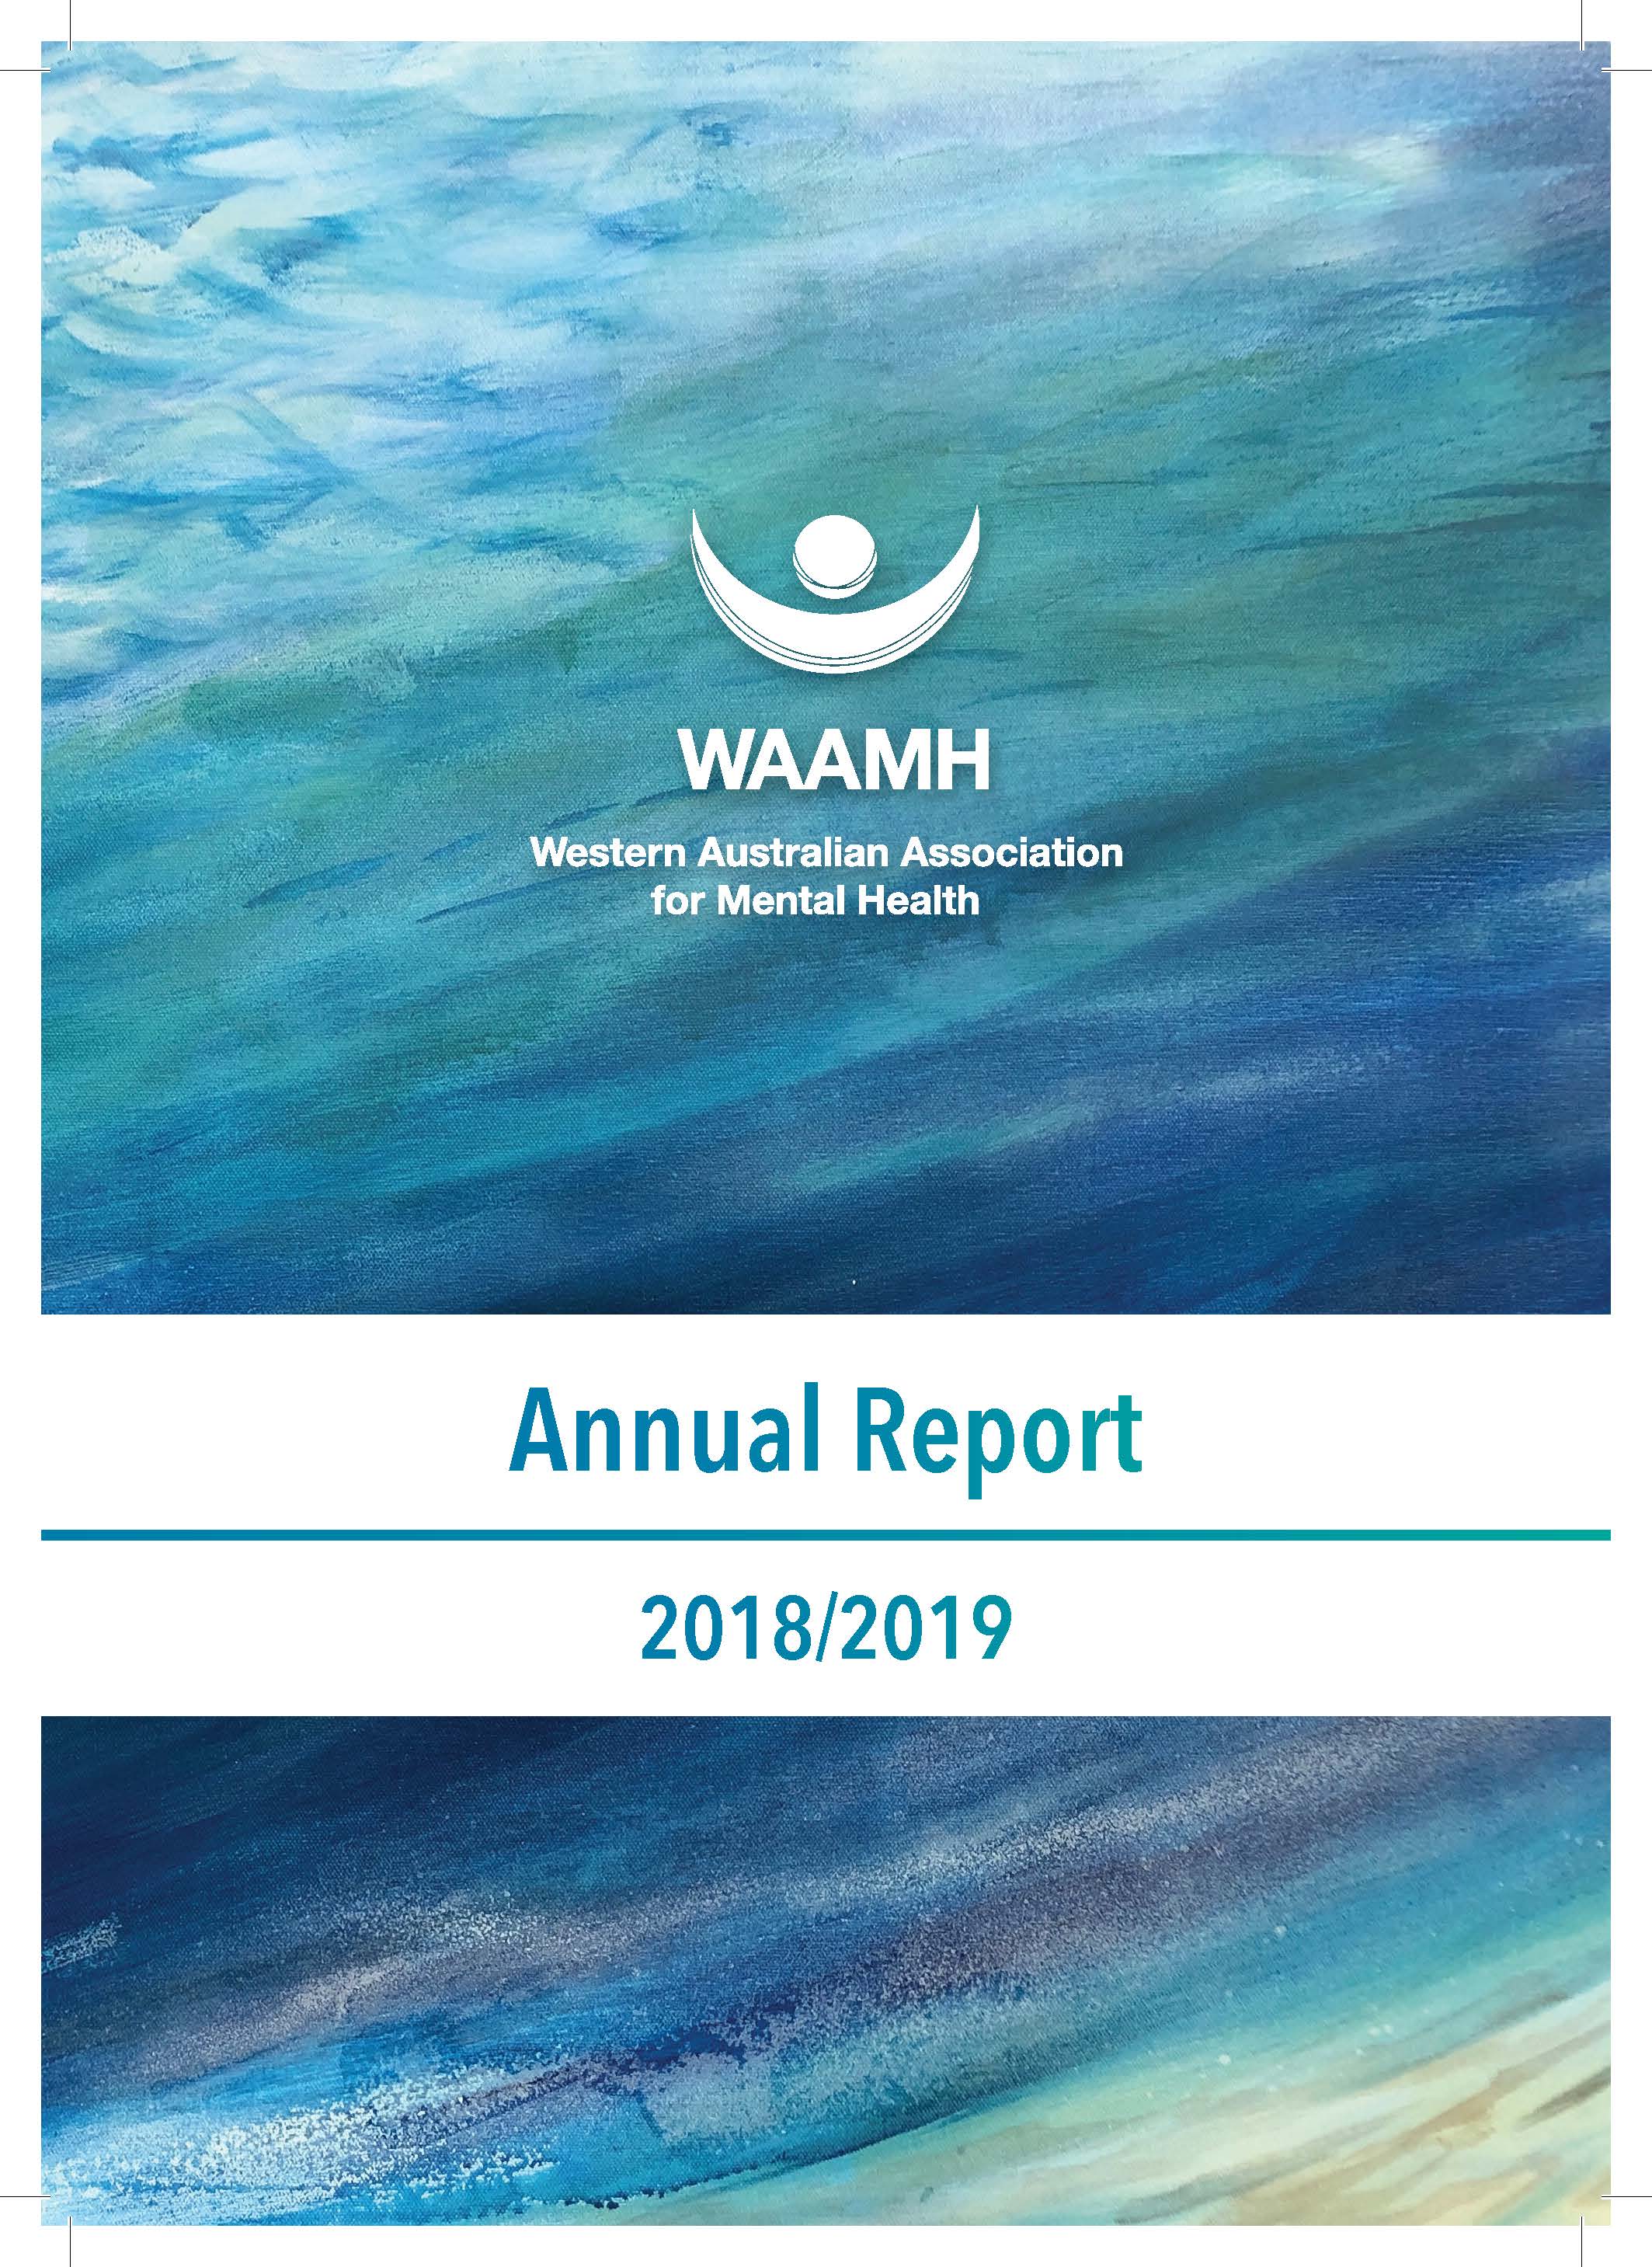 WAAMH Annual Report 2018 - 2019